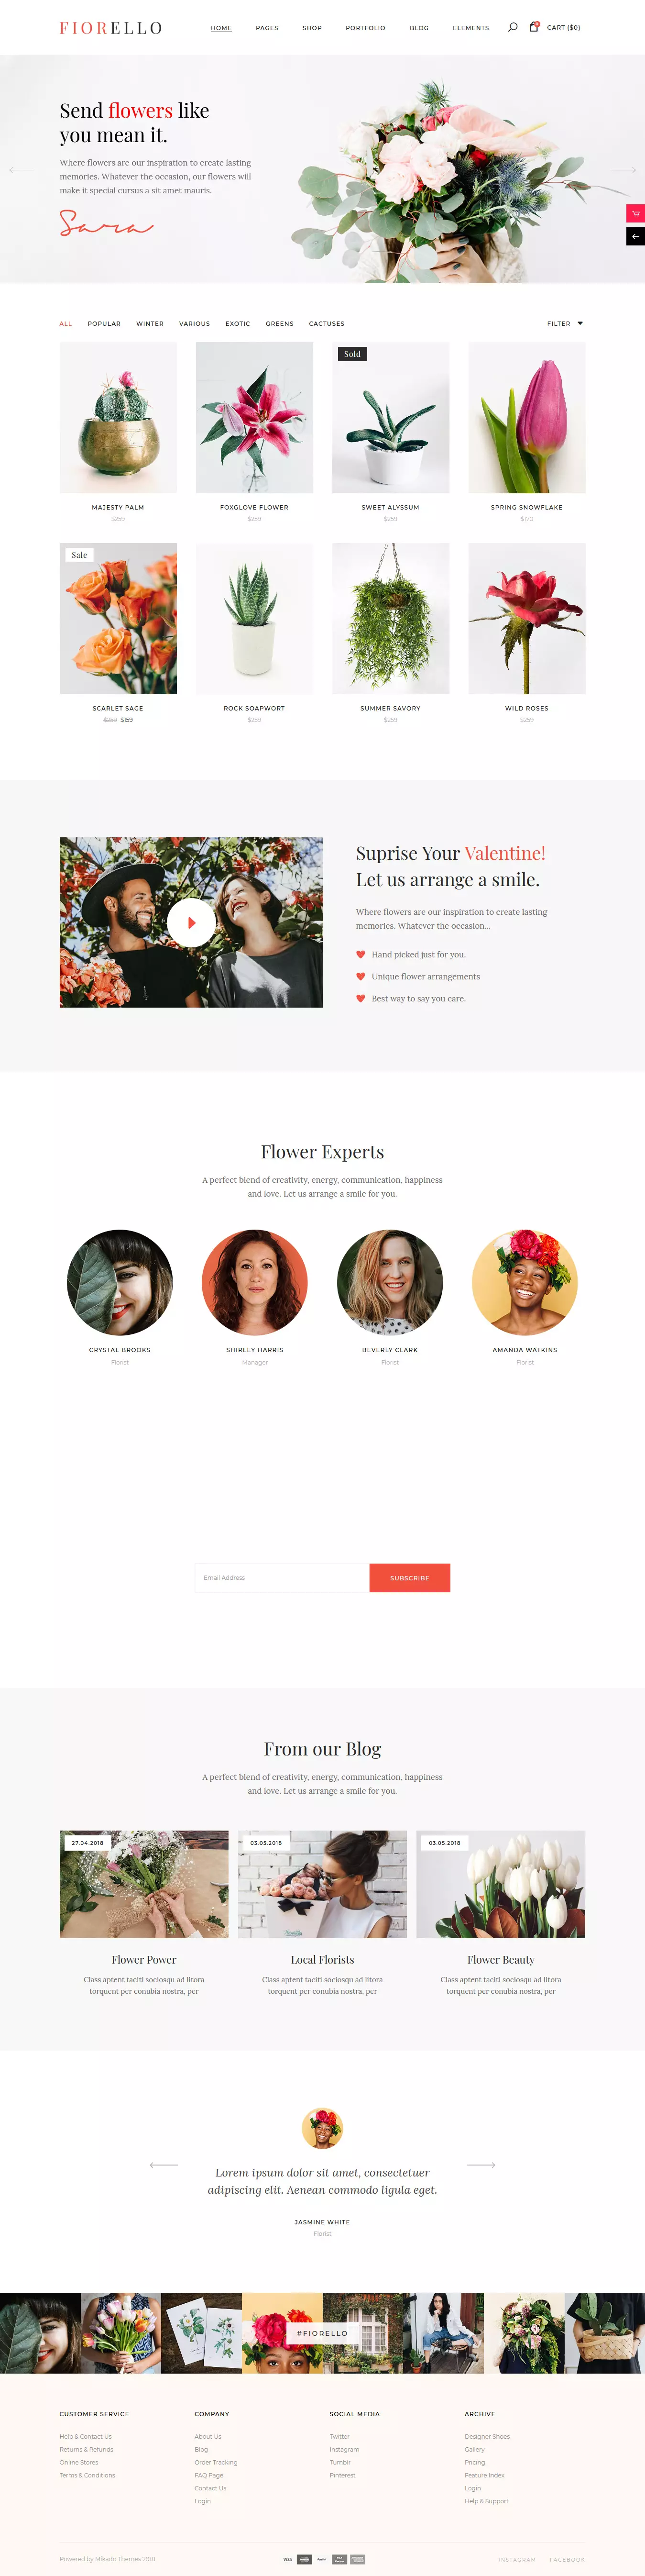 Fiorello - Best Premium Florist and Floriculture WordPress Theme